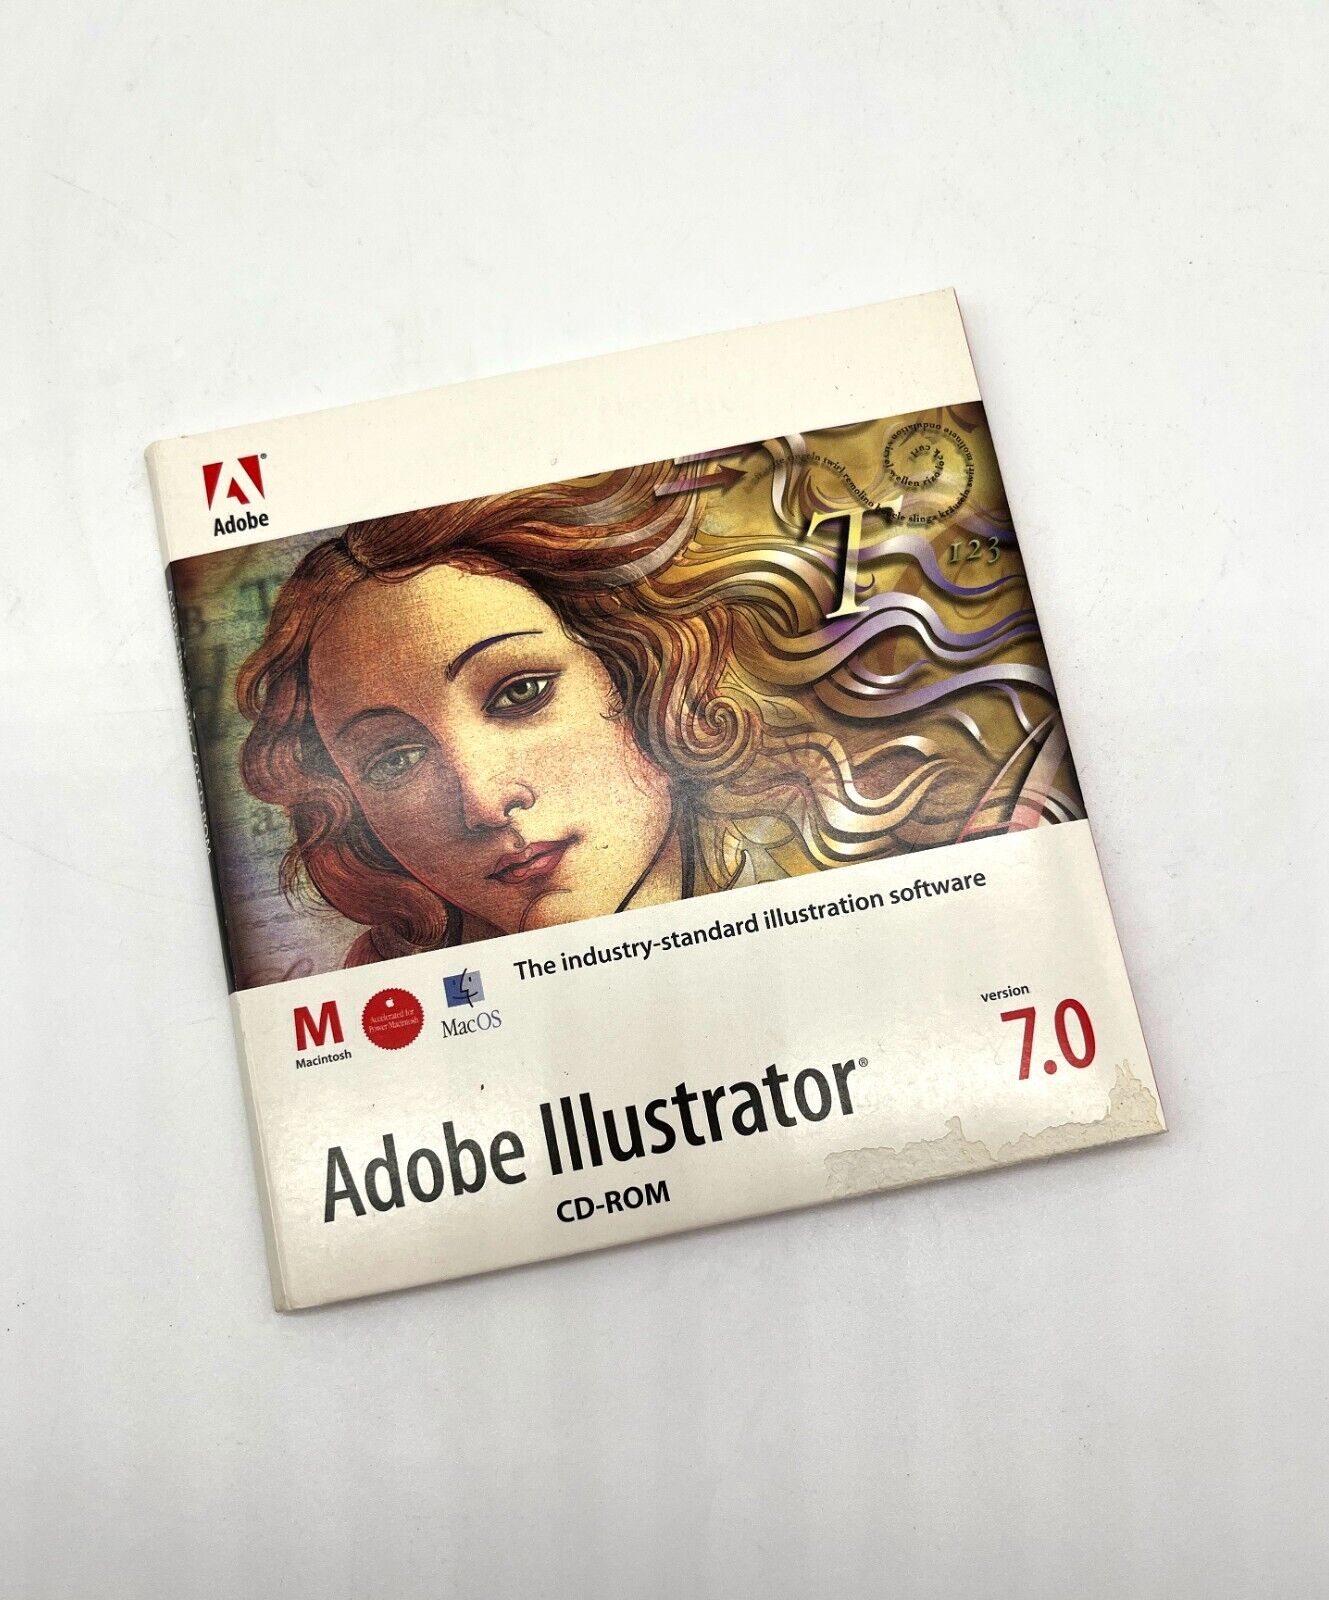 Adobe Illustrator 7 Macintosh Version Computer Software Serial Number